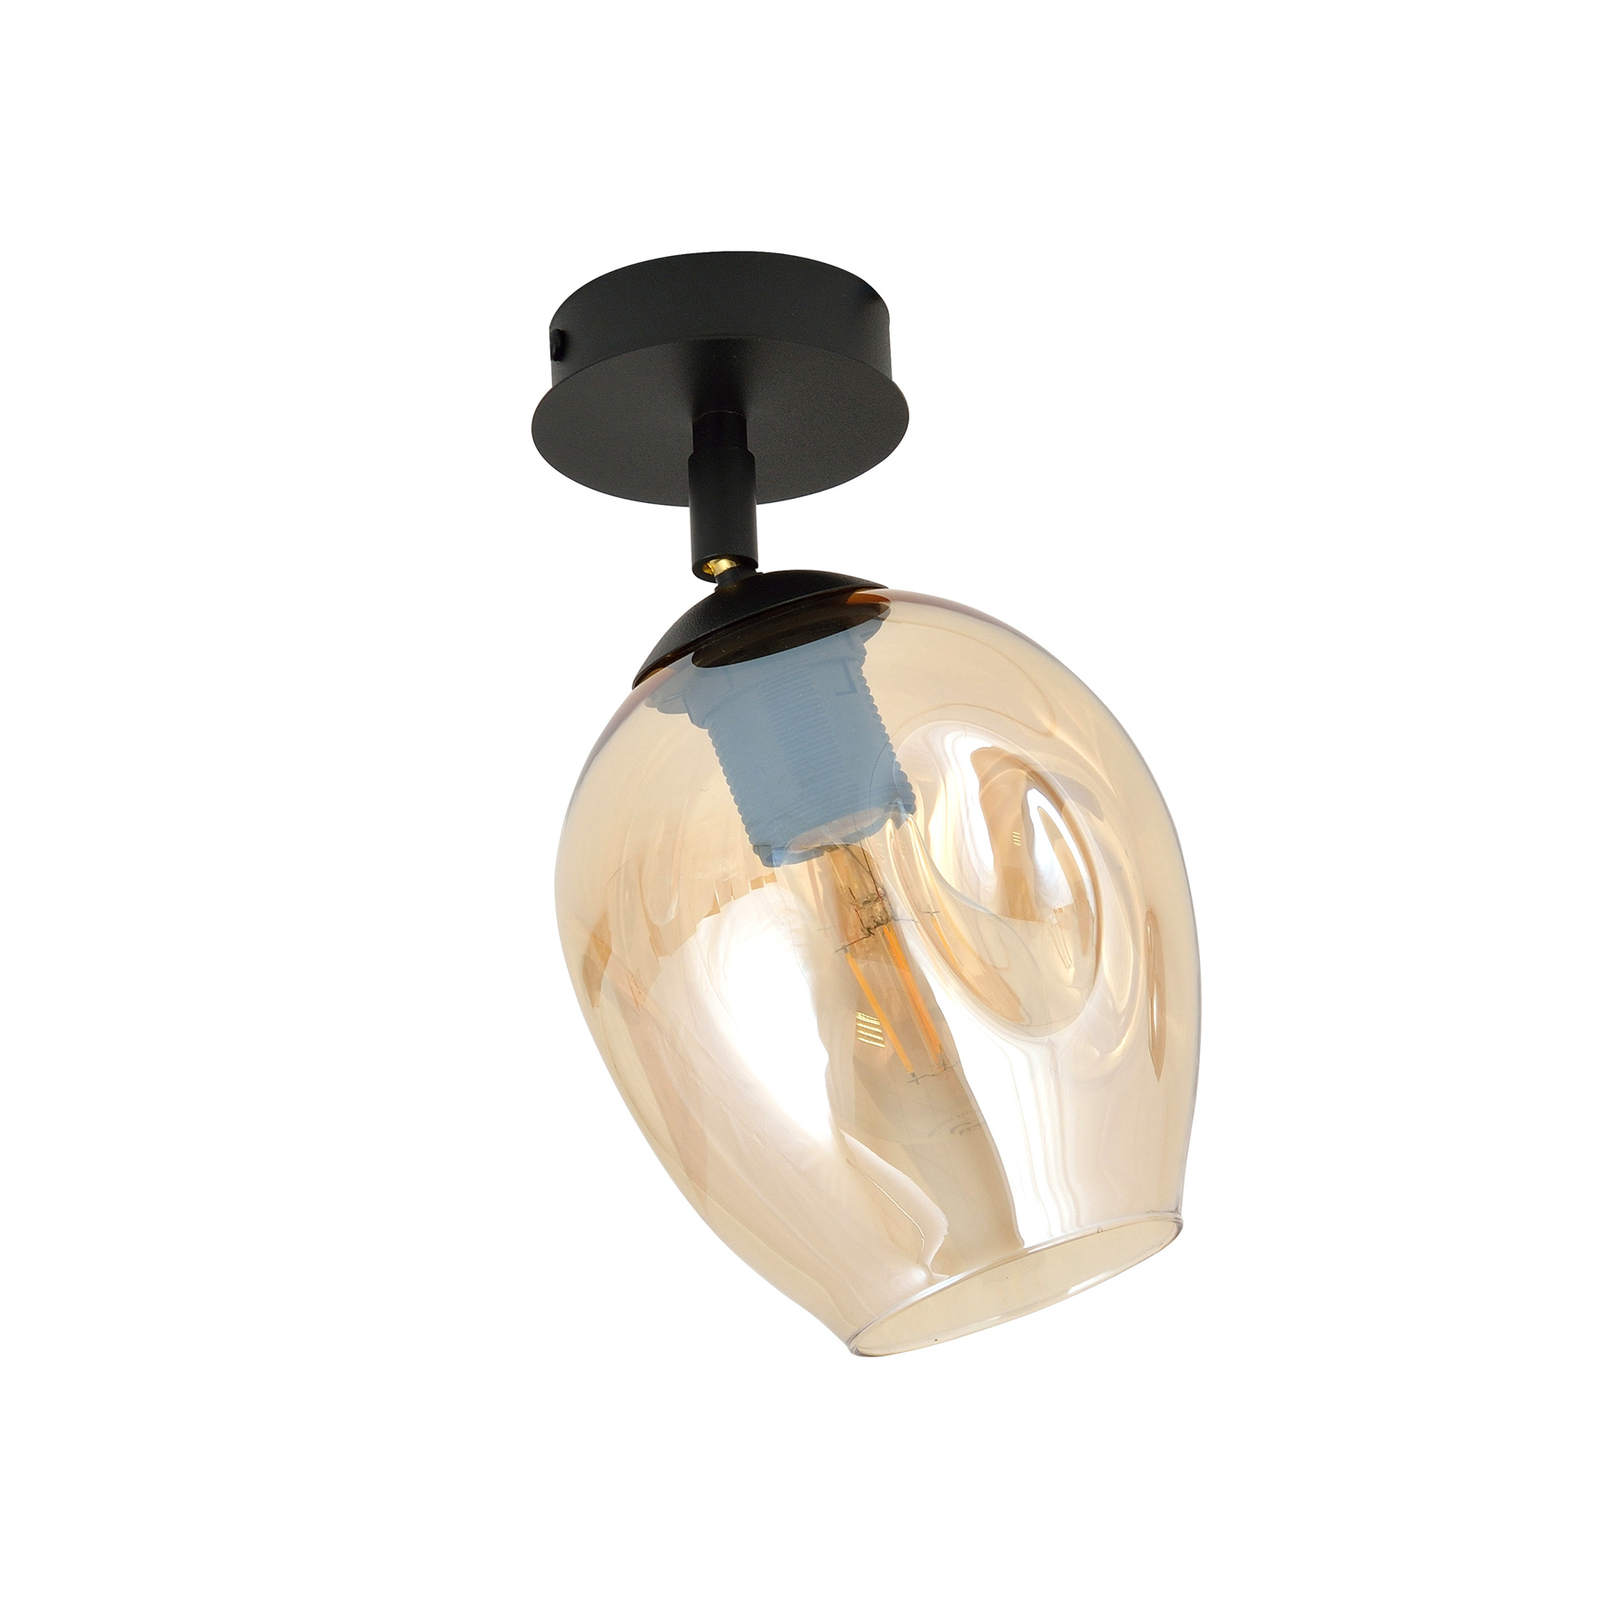 Flow 1 ceiling light one-bulb amber